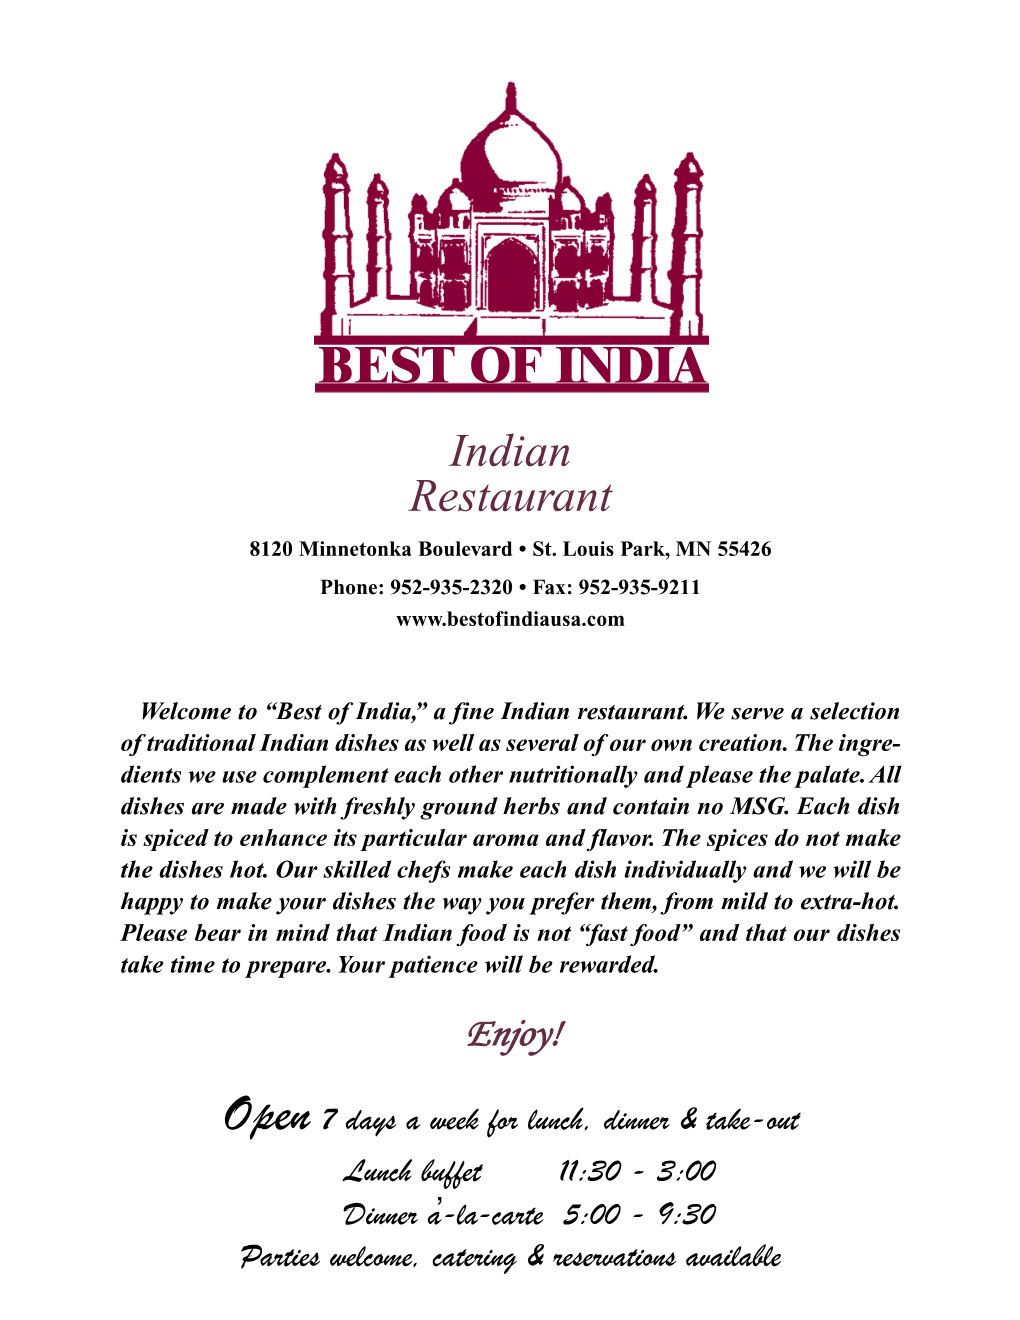 BEST of INDIA out Tues–Sun Indian Restaurant Indian Phone: 952-935-2320 Restaur8a12n0t Minnetonka Boule Va Rd Fax: 952-9358-19202 M11innetonka Boulevard • St